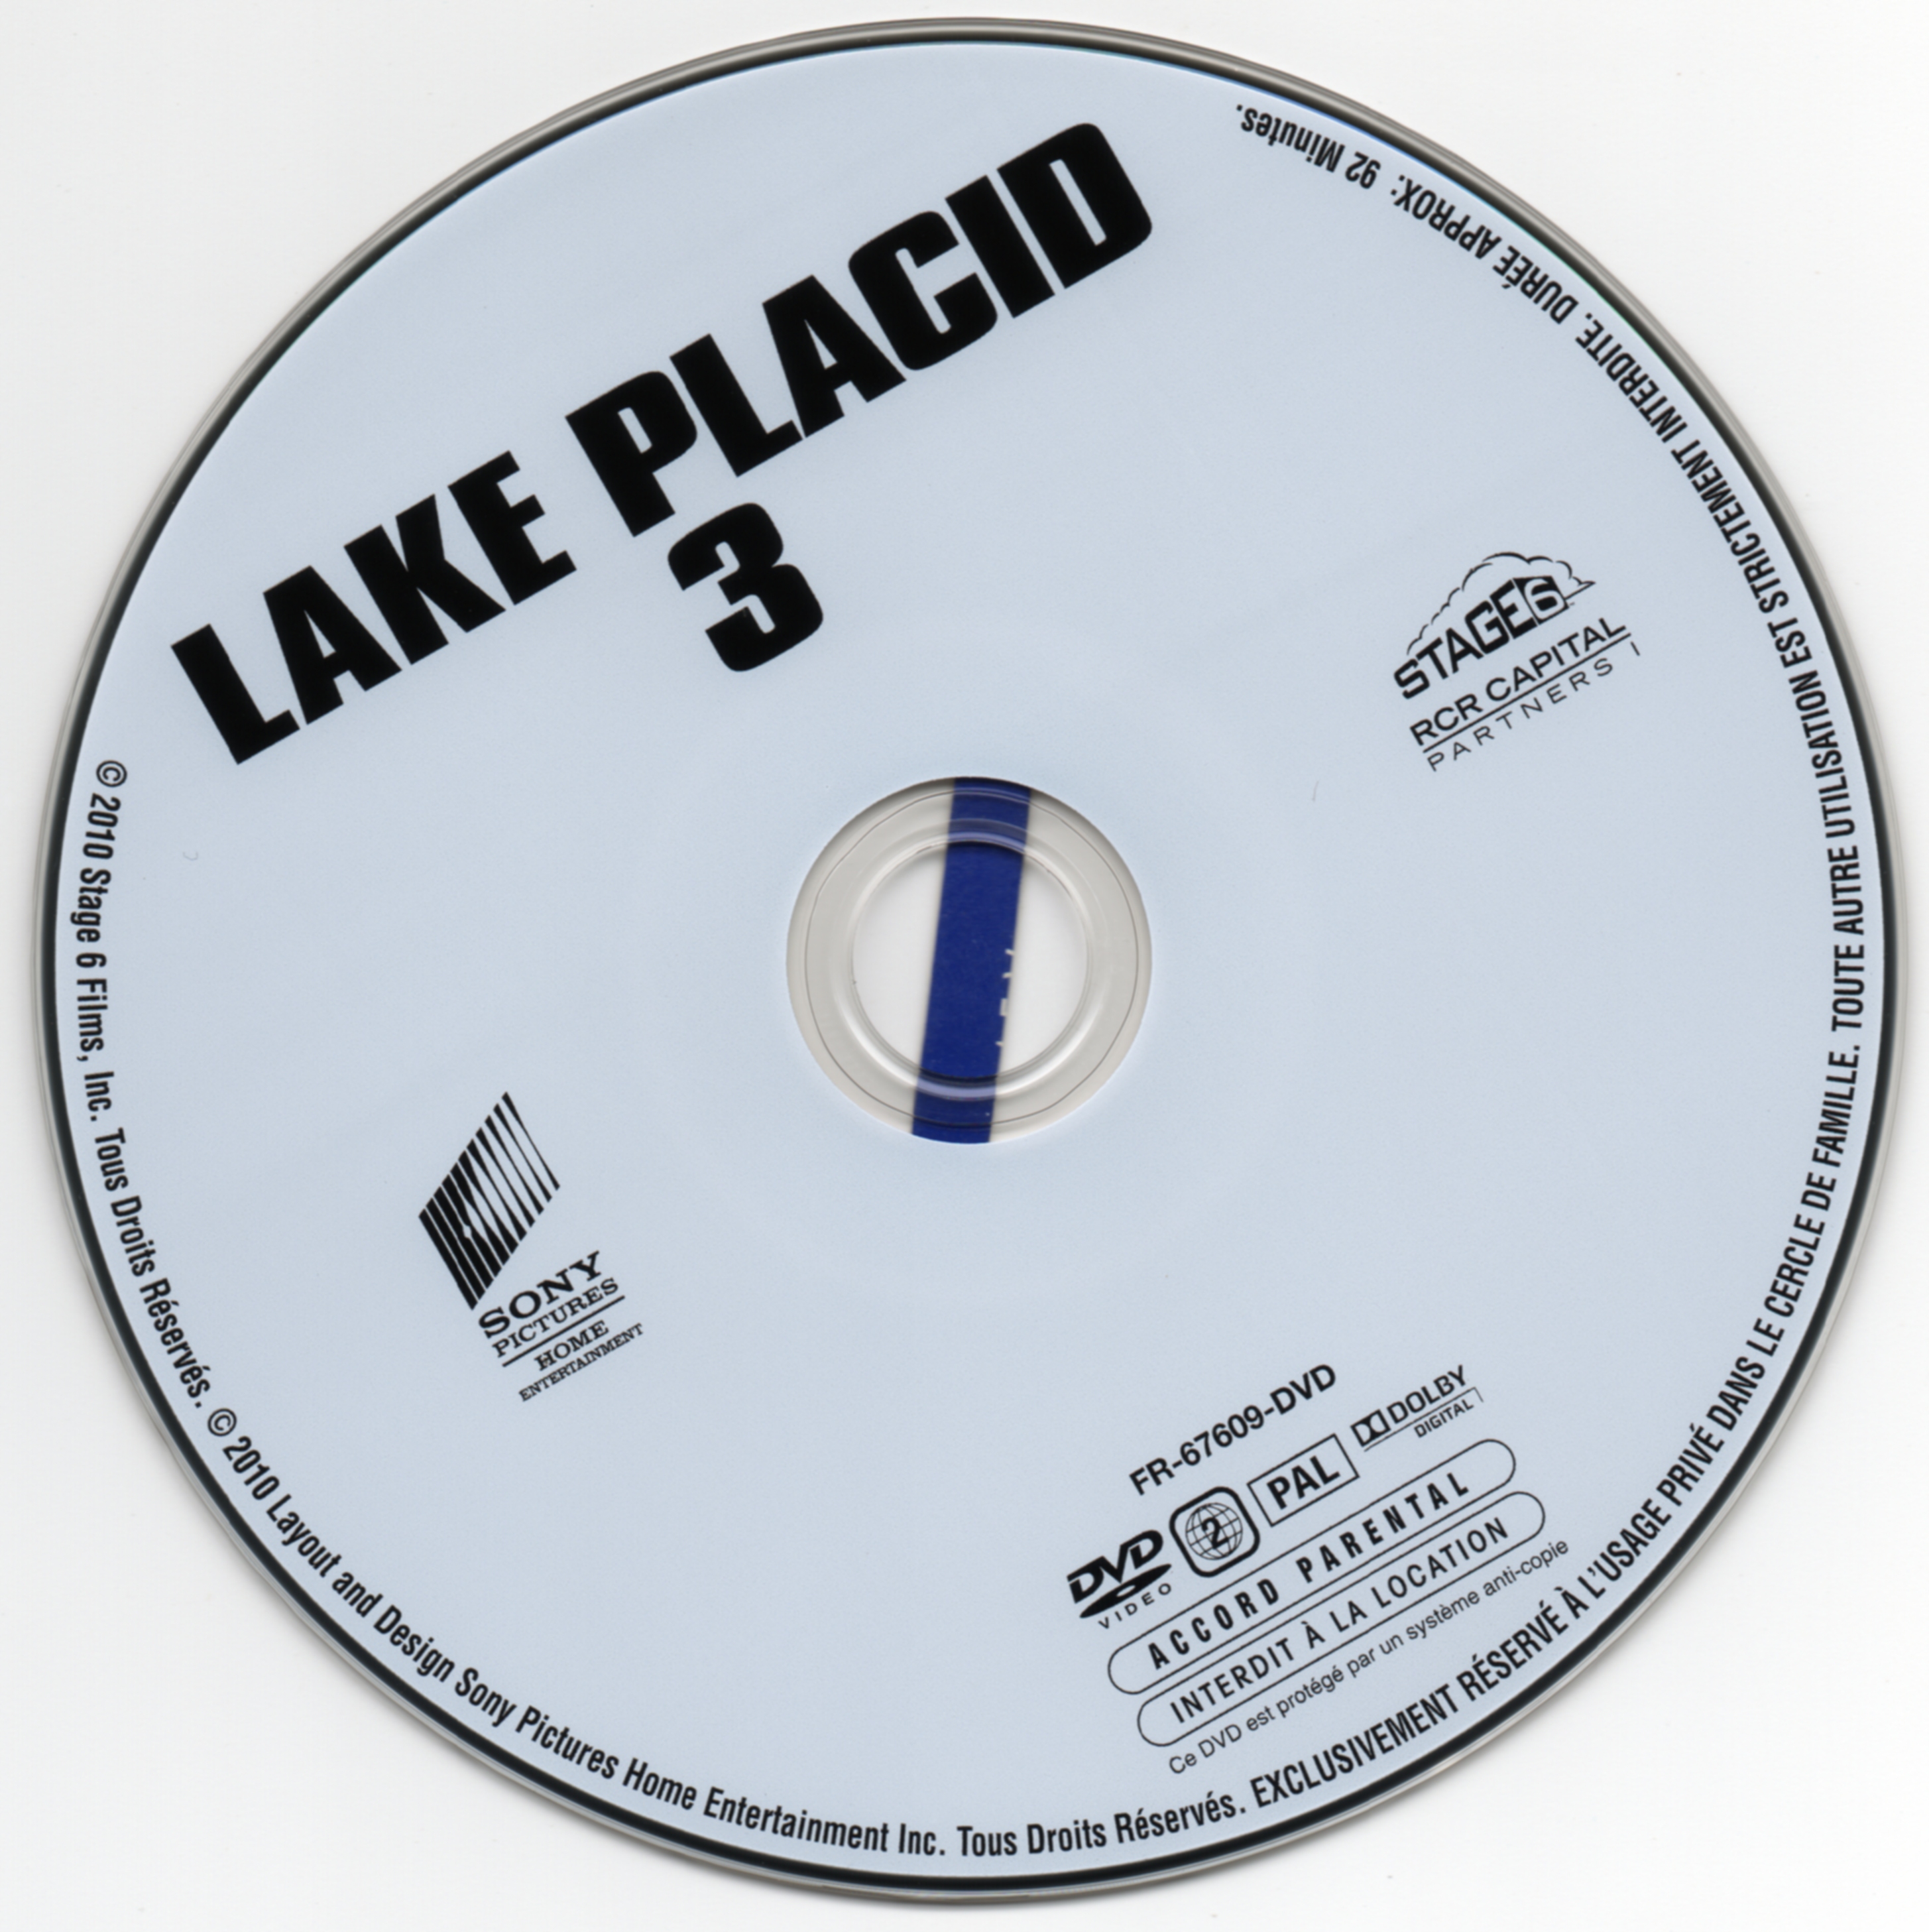 Lake placid 3